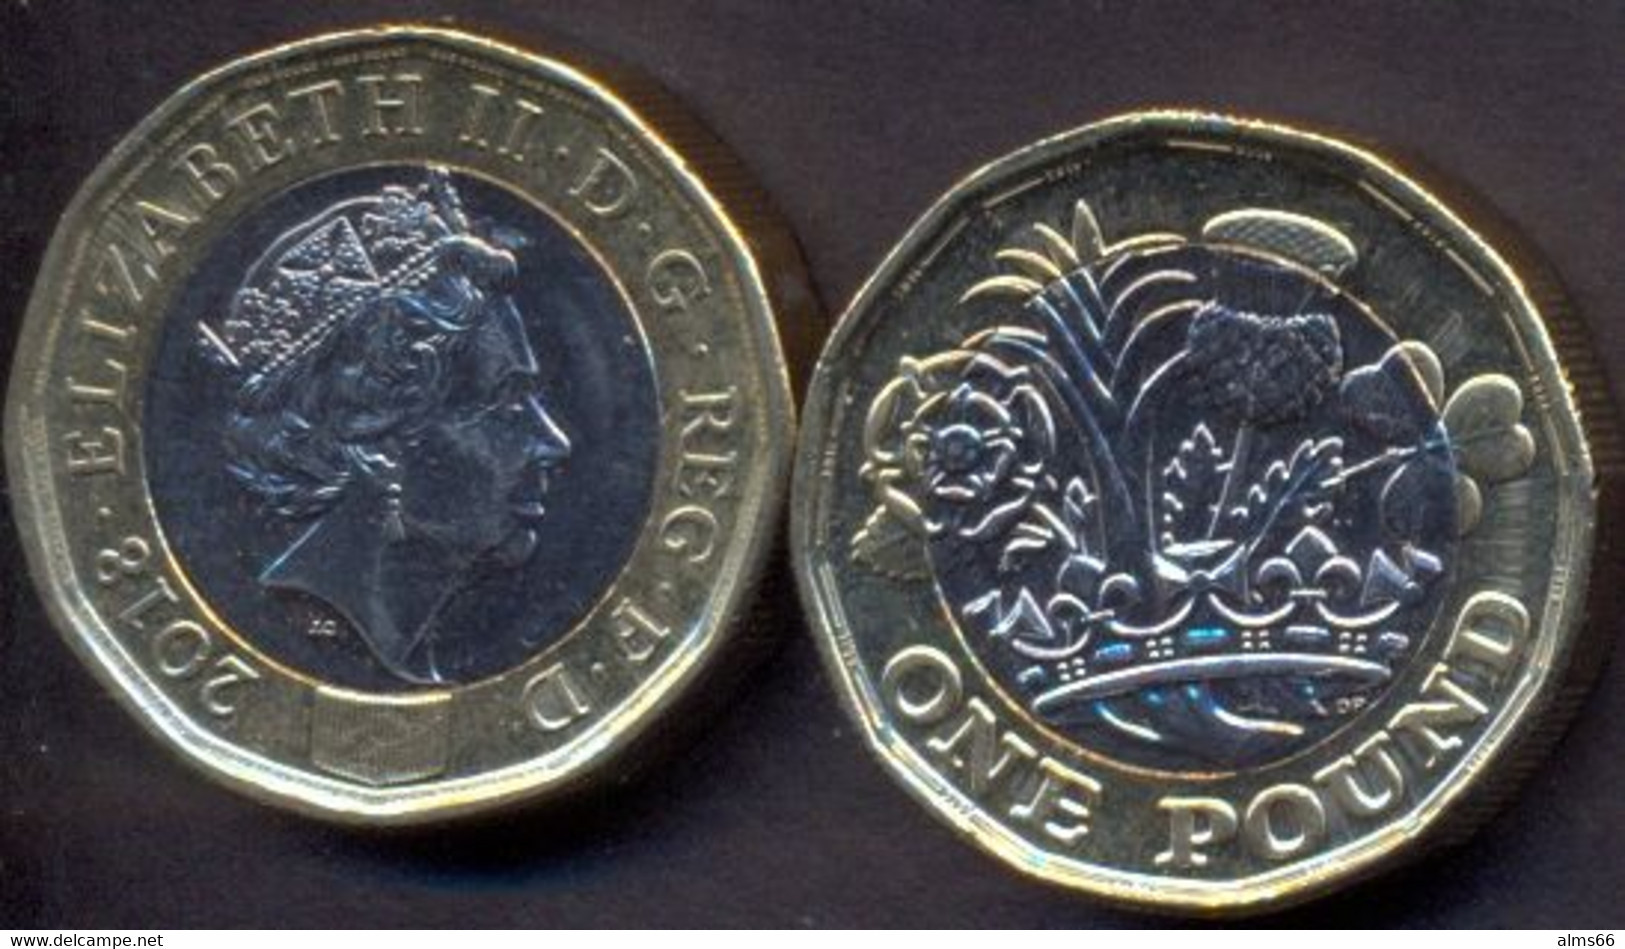 Great Britain UK 1 Pound 2018 XF+ - 1 Pound